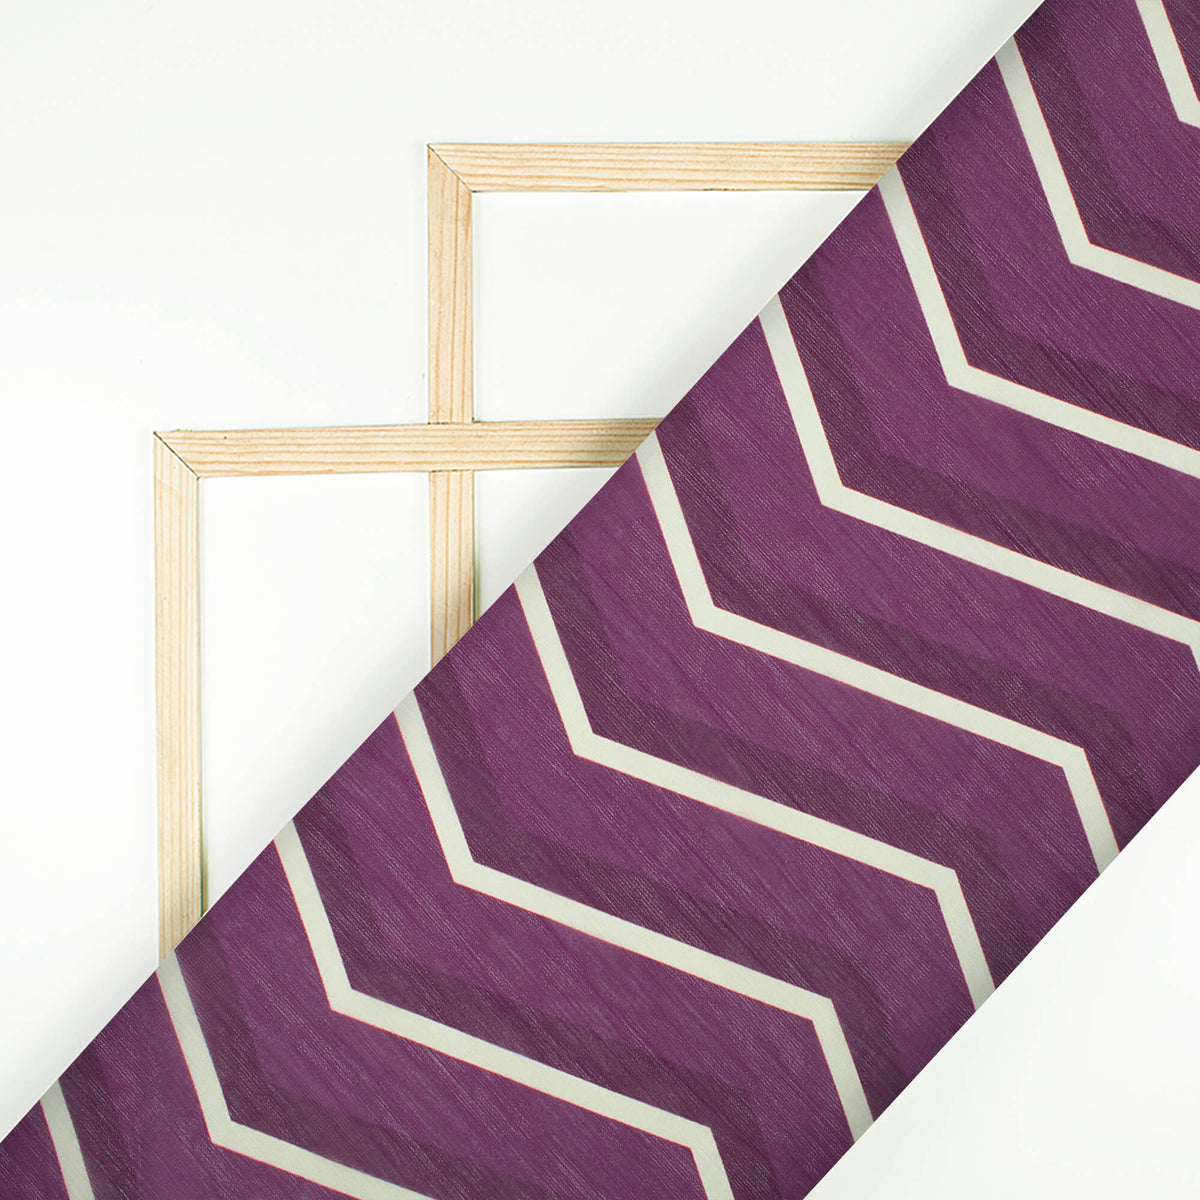 Wine Purple And Cream Chevron Pattern Digital Print Chiffon Fabric